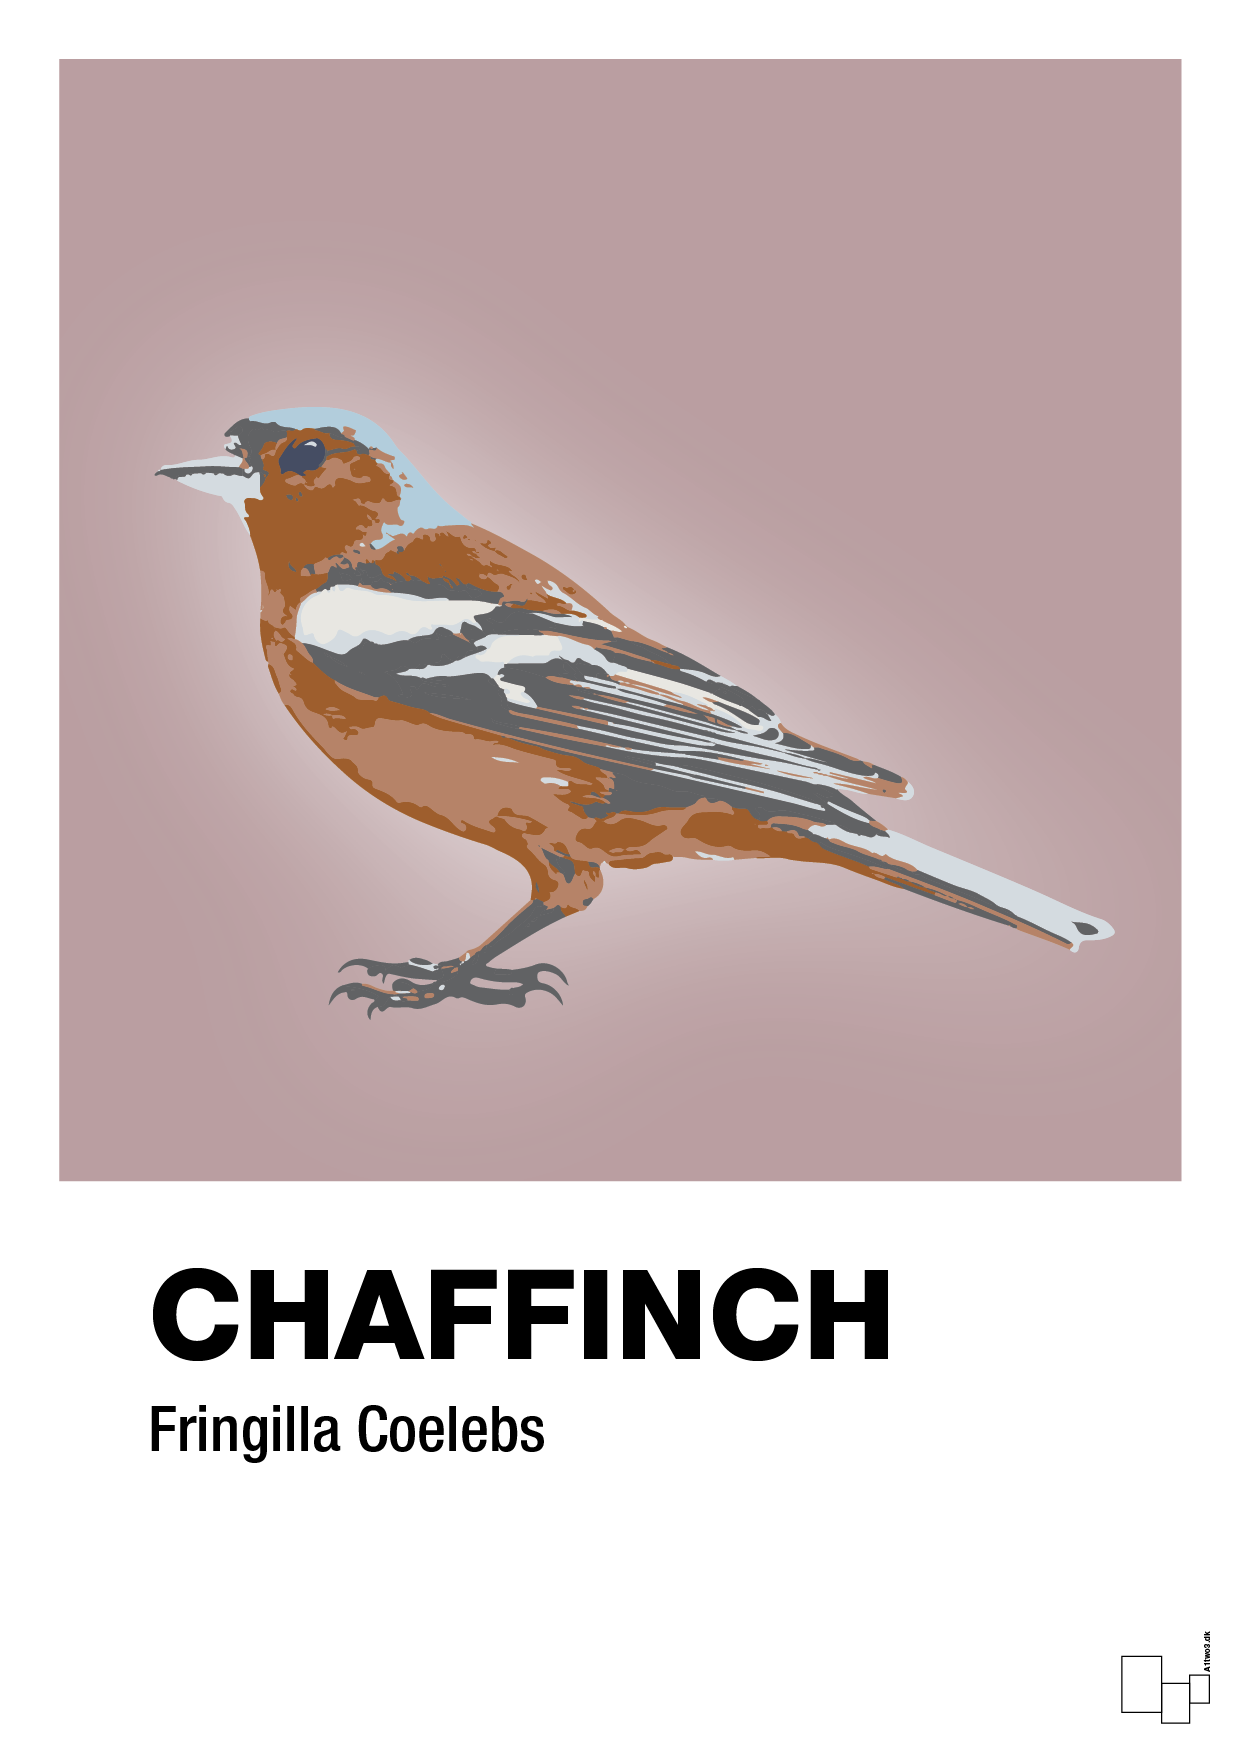 chaffinch - Plakat med Videnskab i Light Rose